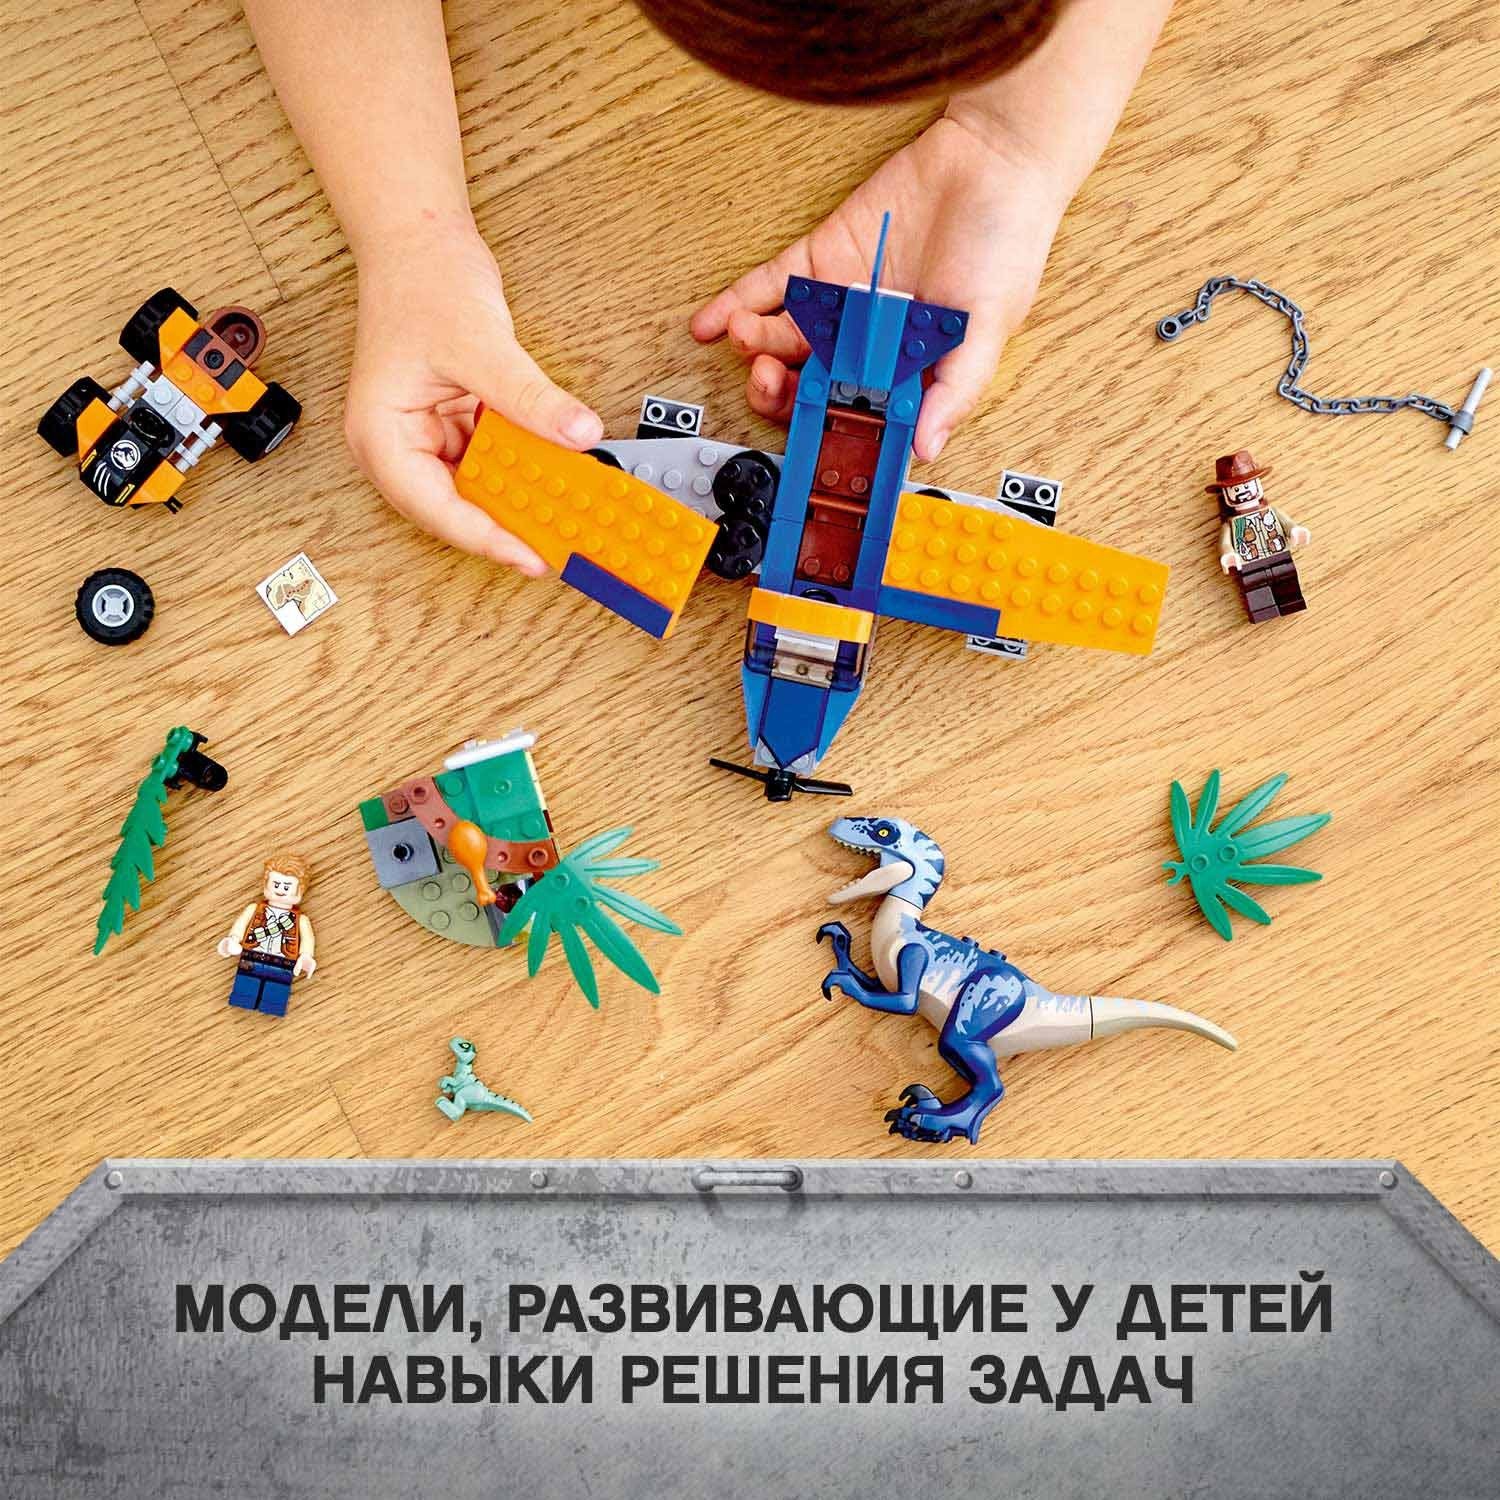 Lego Jurassic World 75942 Велоцираптор: спасение на биплане